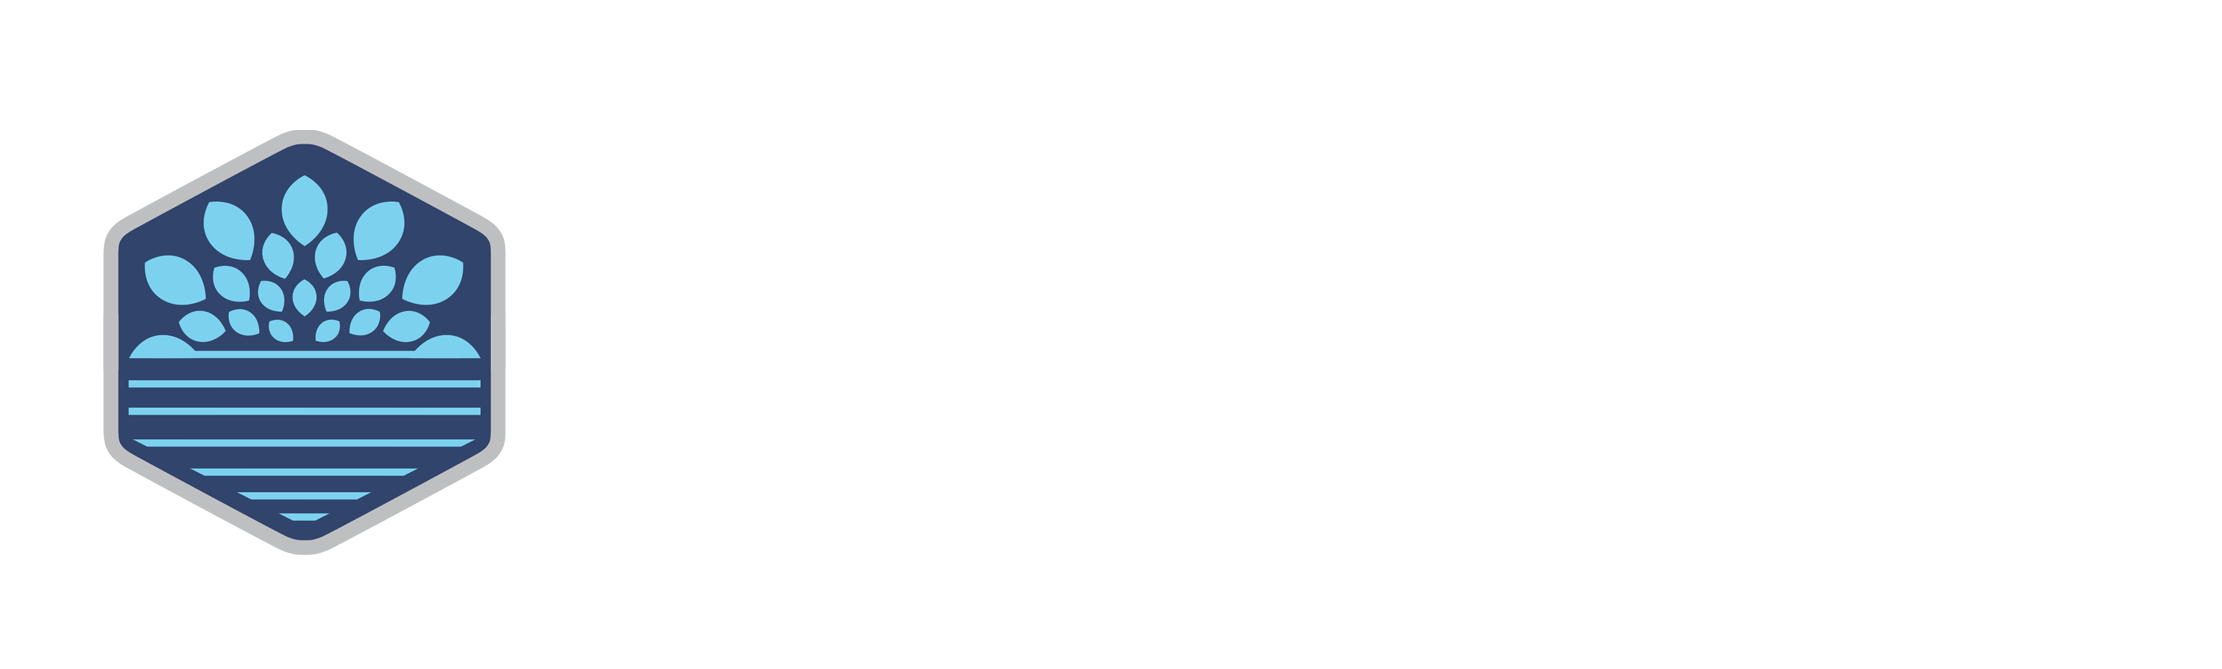 Smart Health Clubs